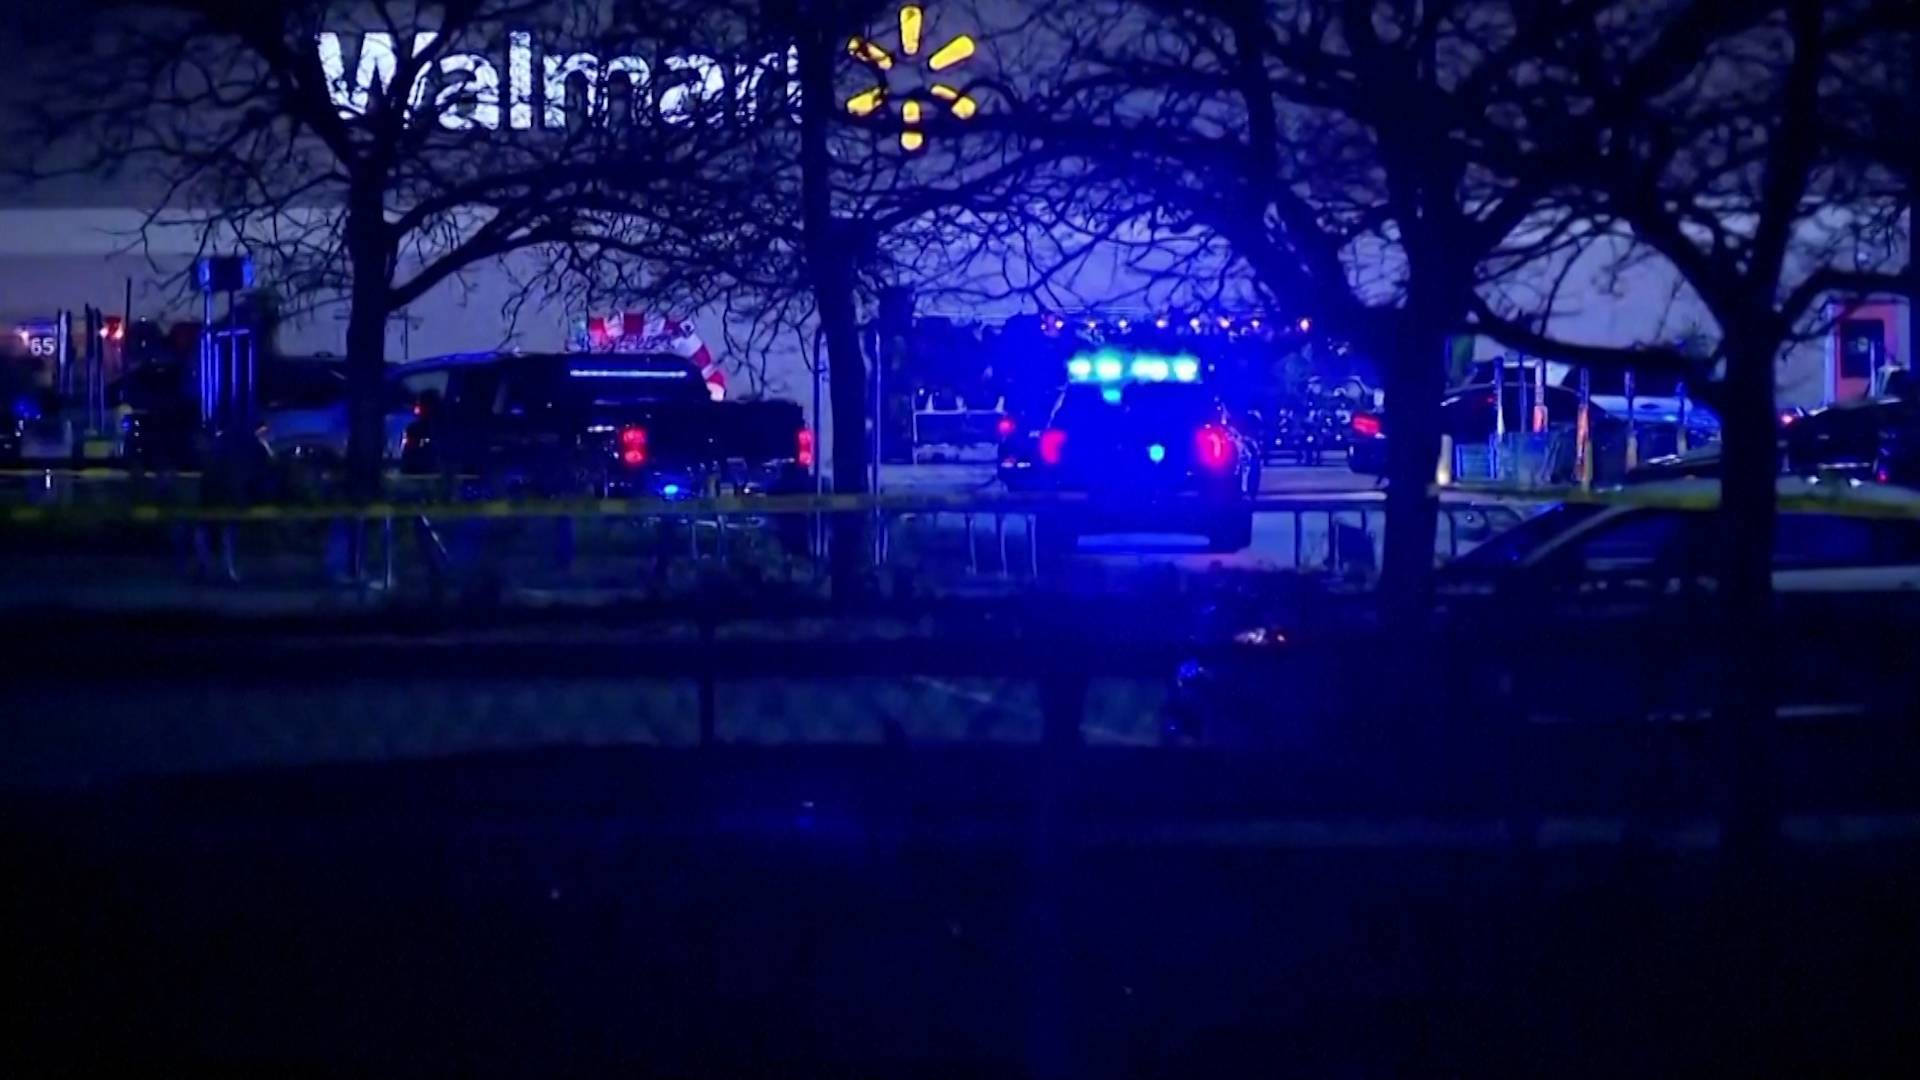 Six People Shot Dead at Walmart in Chesapeake, Virginia